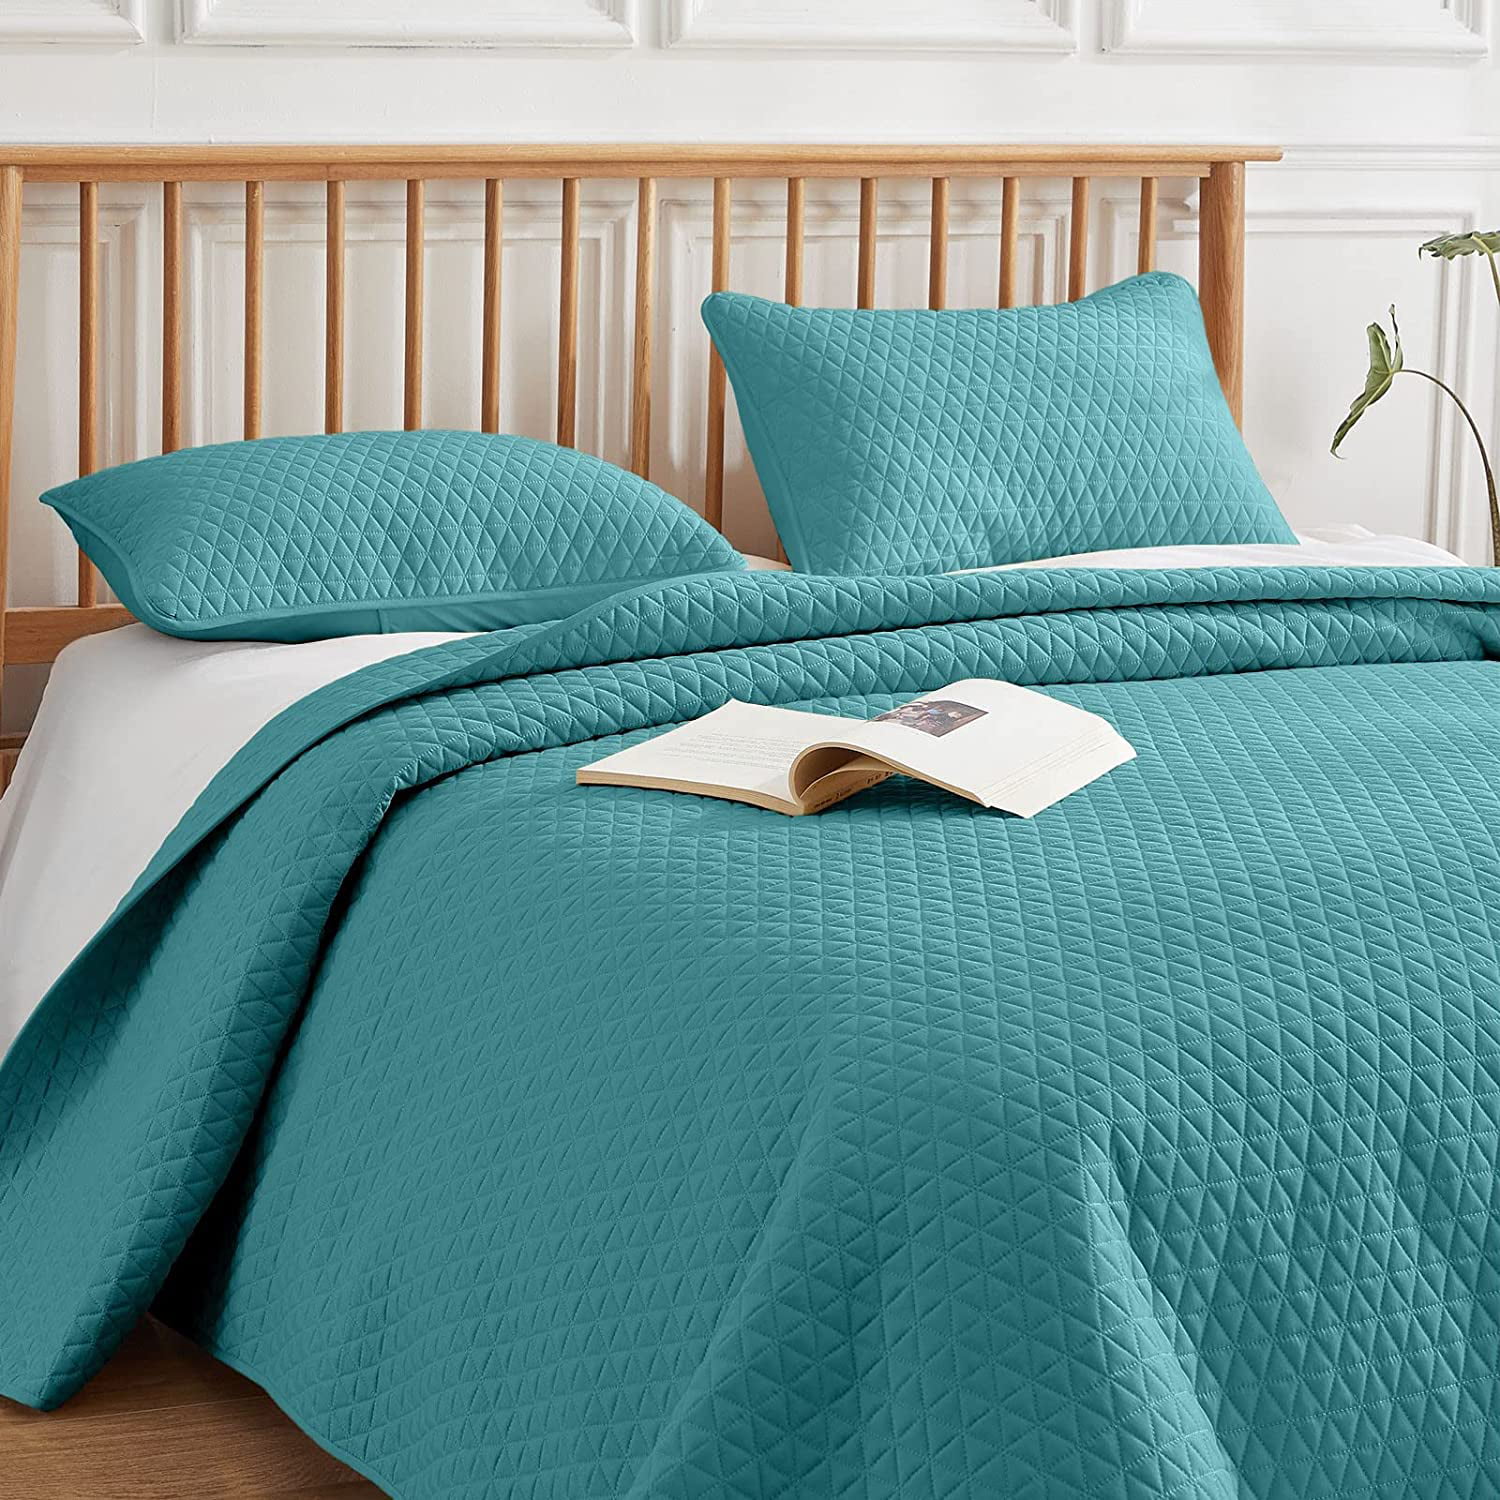 1 Quilt, 2 Pillow Shams Bedspreads Queen/Double Size VEEYOO Bedspread Quilt Set Gentle Grey Soft Microfiber Lightweight Coverlet Quilt Set for Summer 